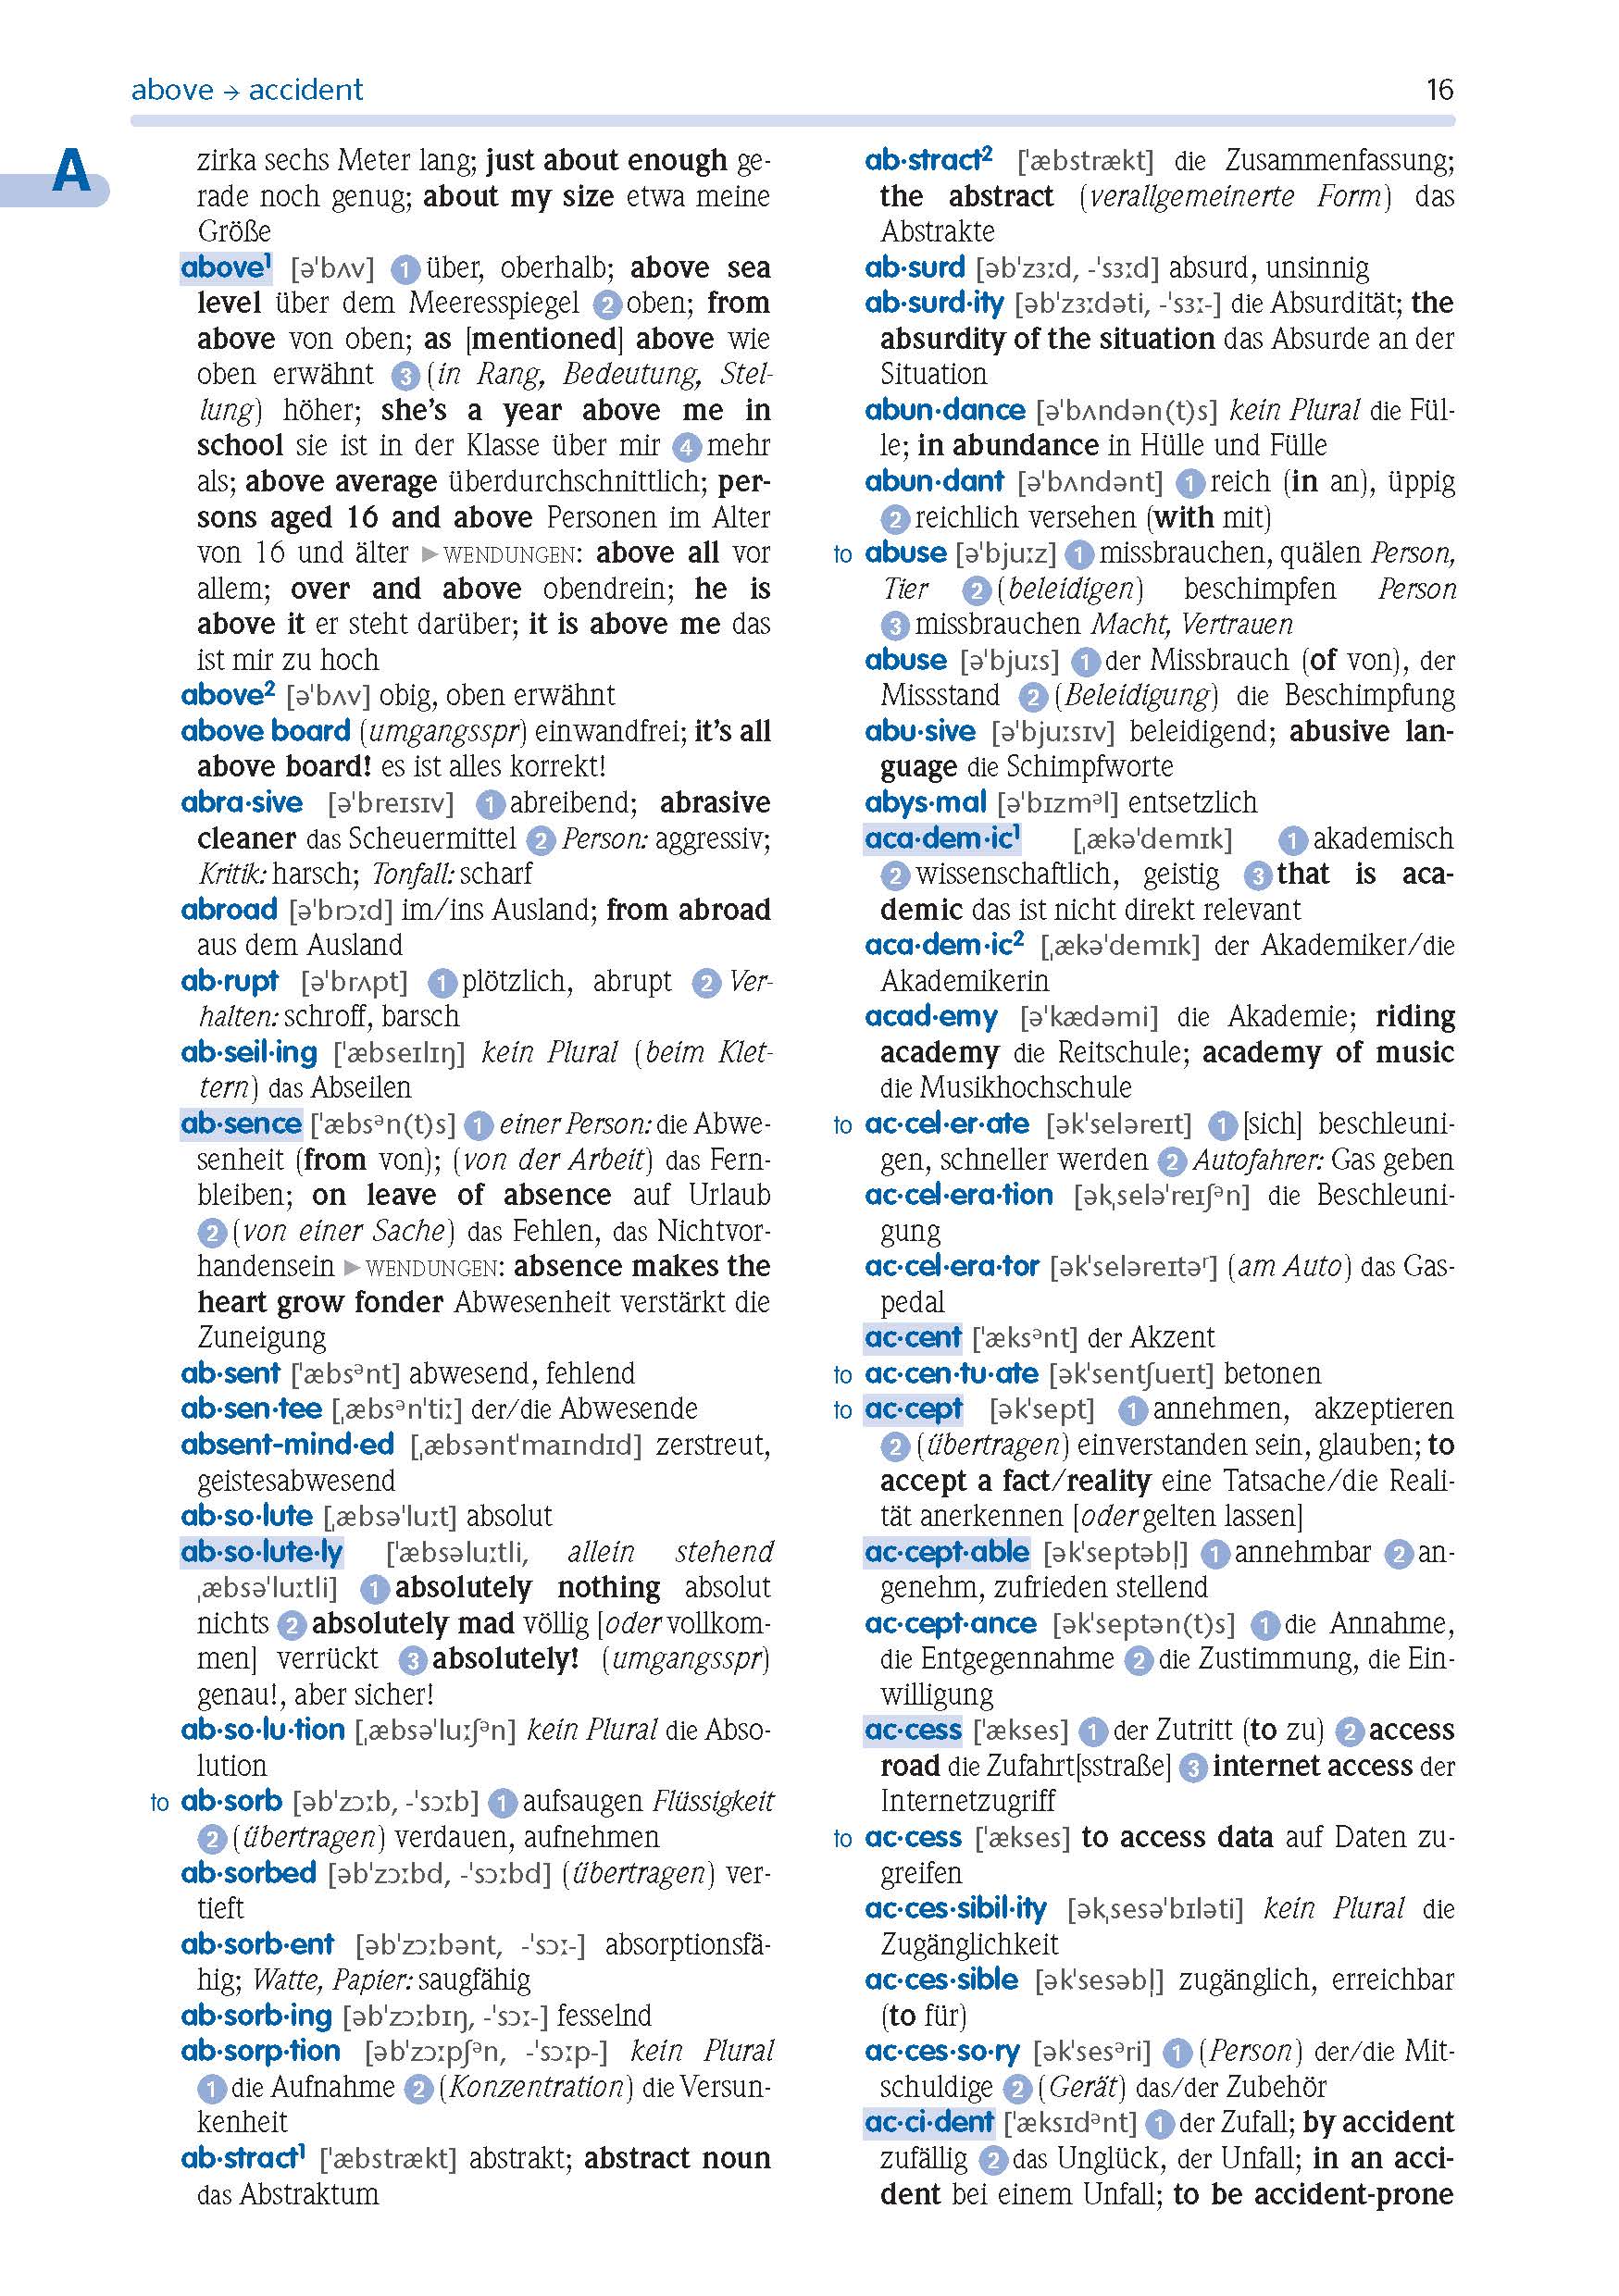 PONS Express Wörterbuch Englisch